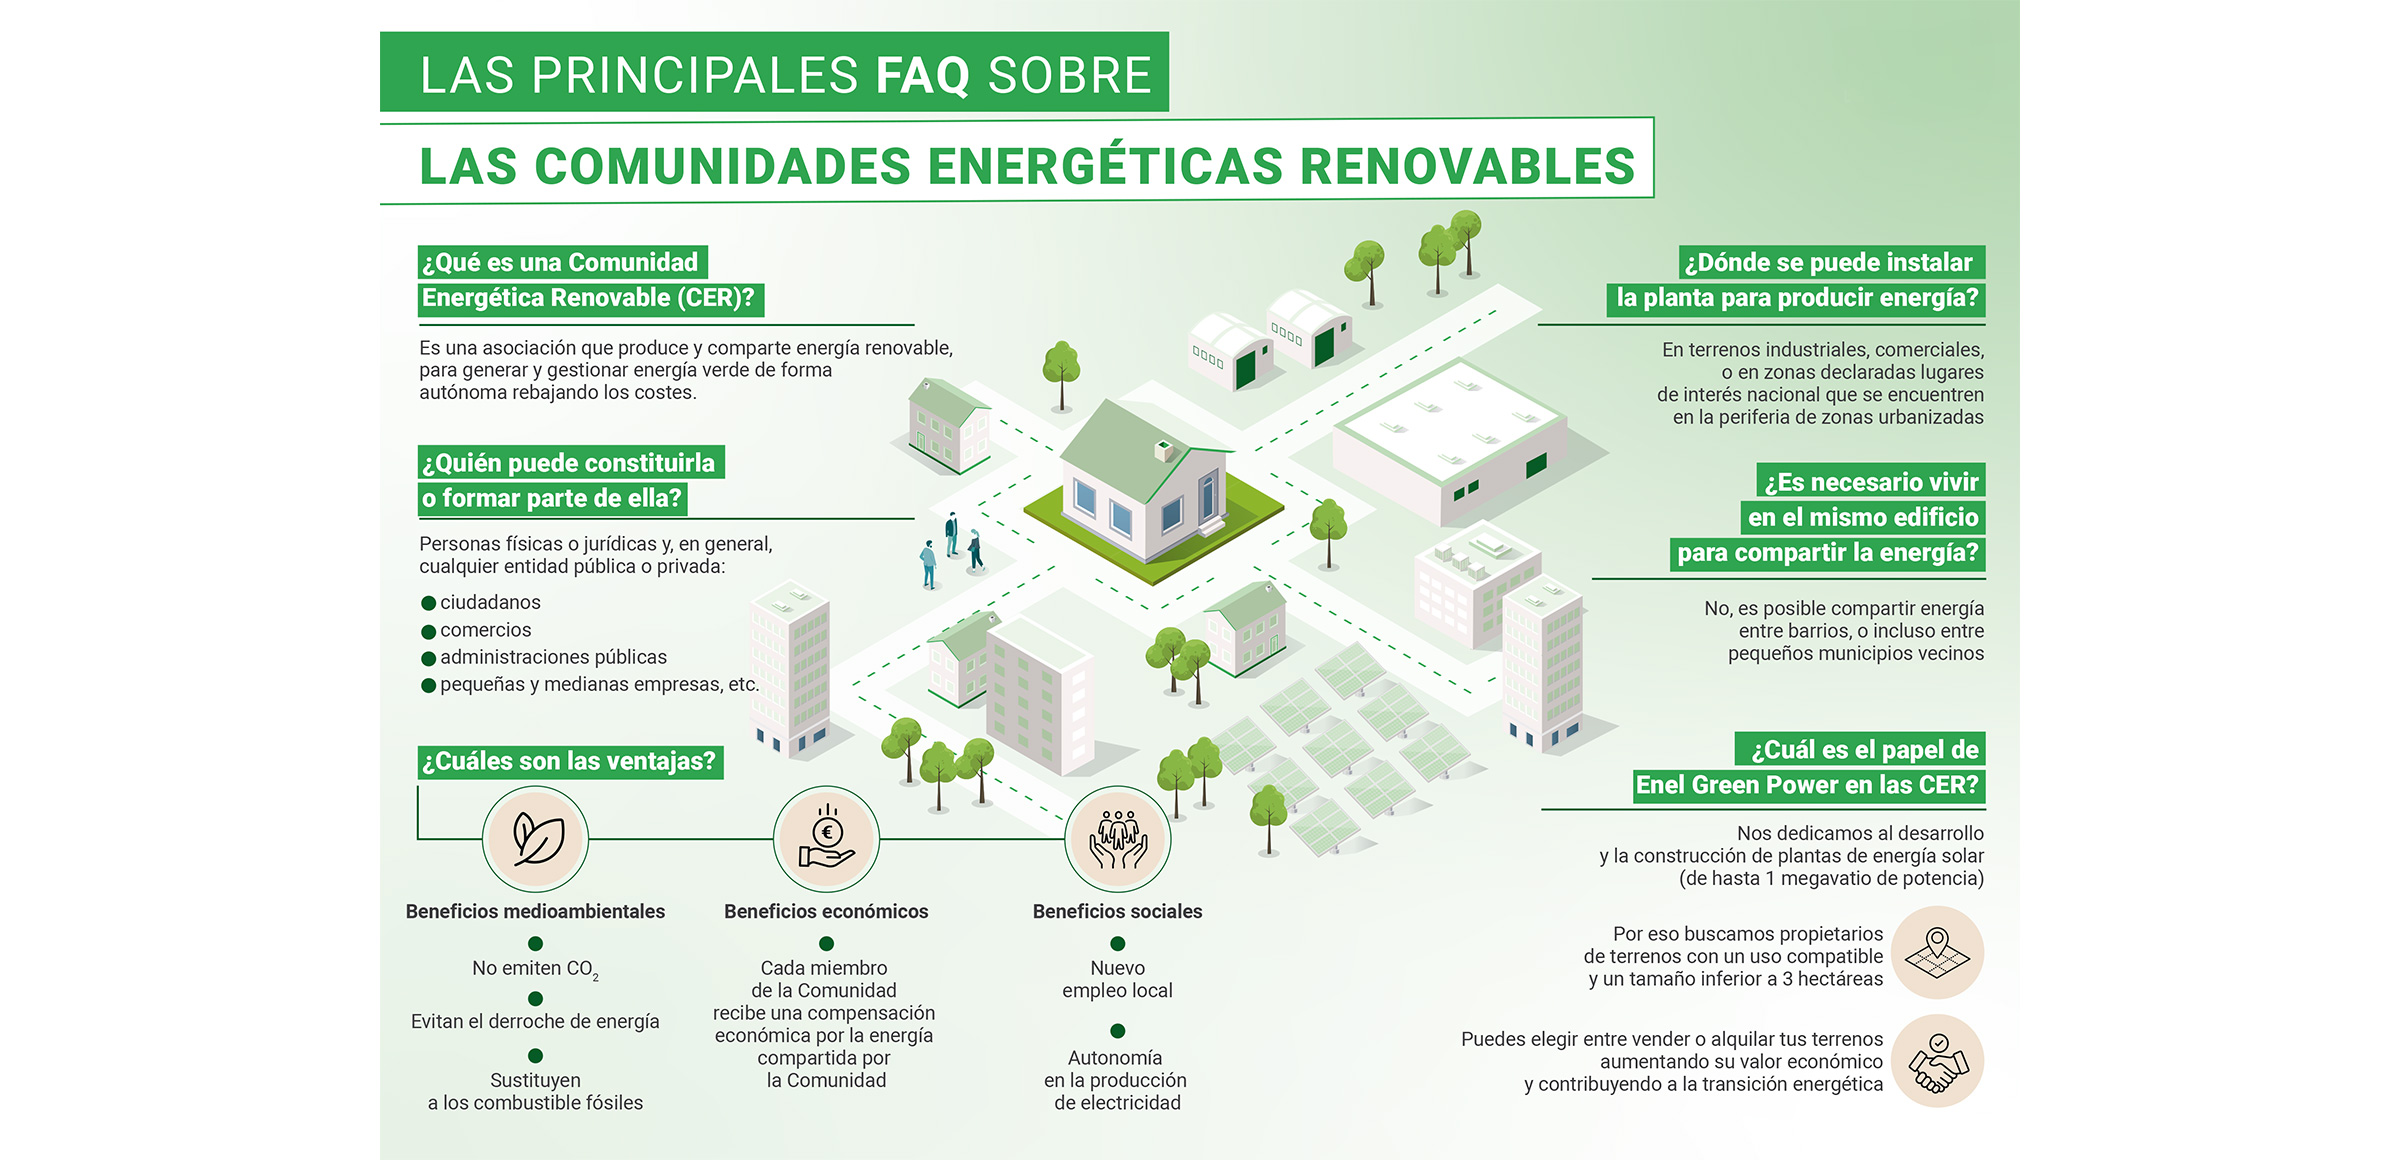 Preguntas frecuentes sobre las Comunidades Energ\u00E9ticas Renovables (CER)